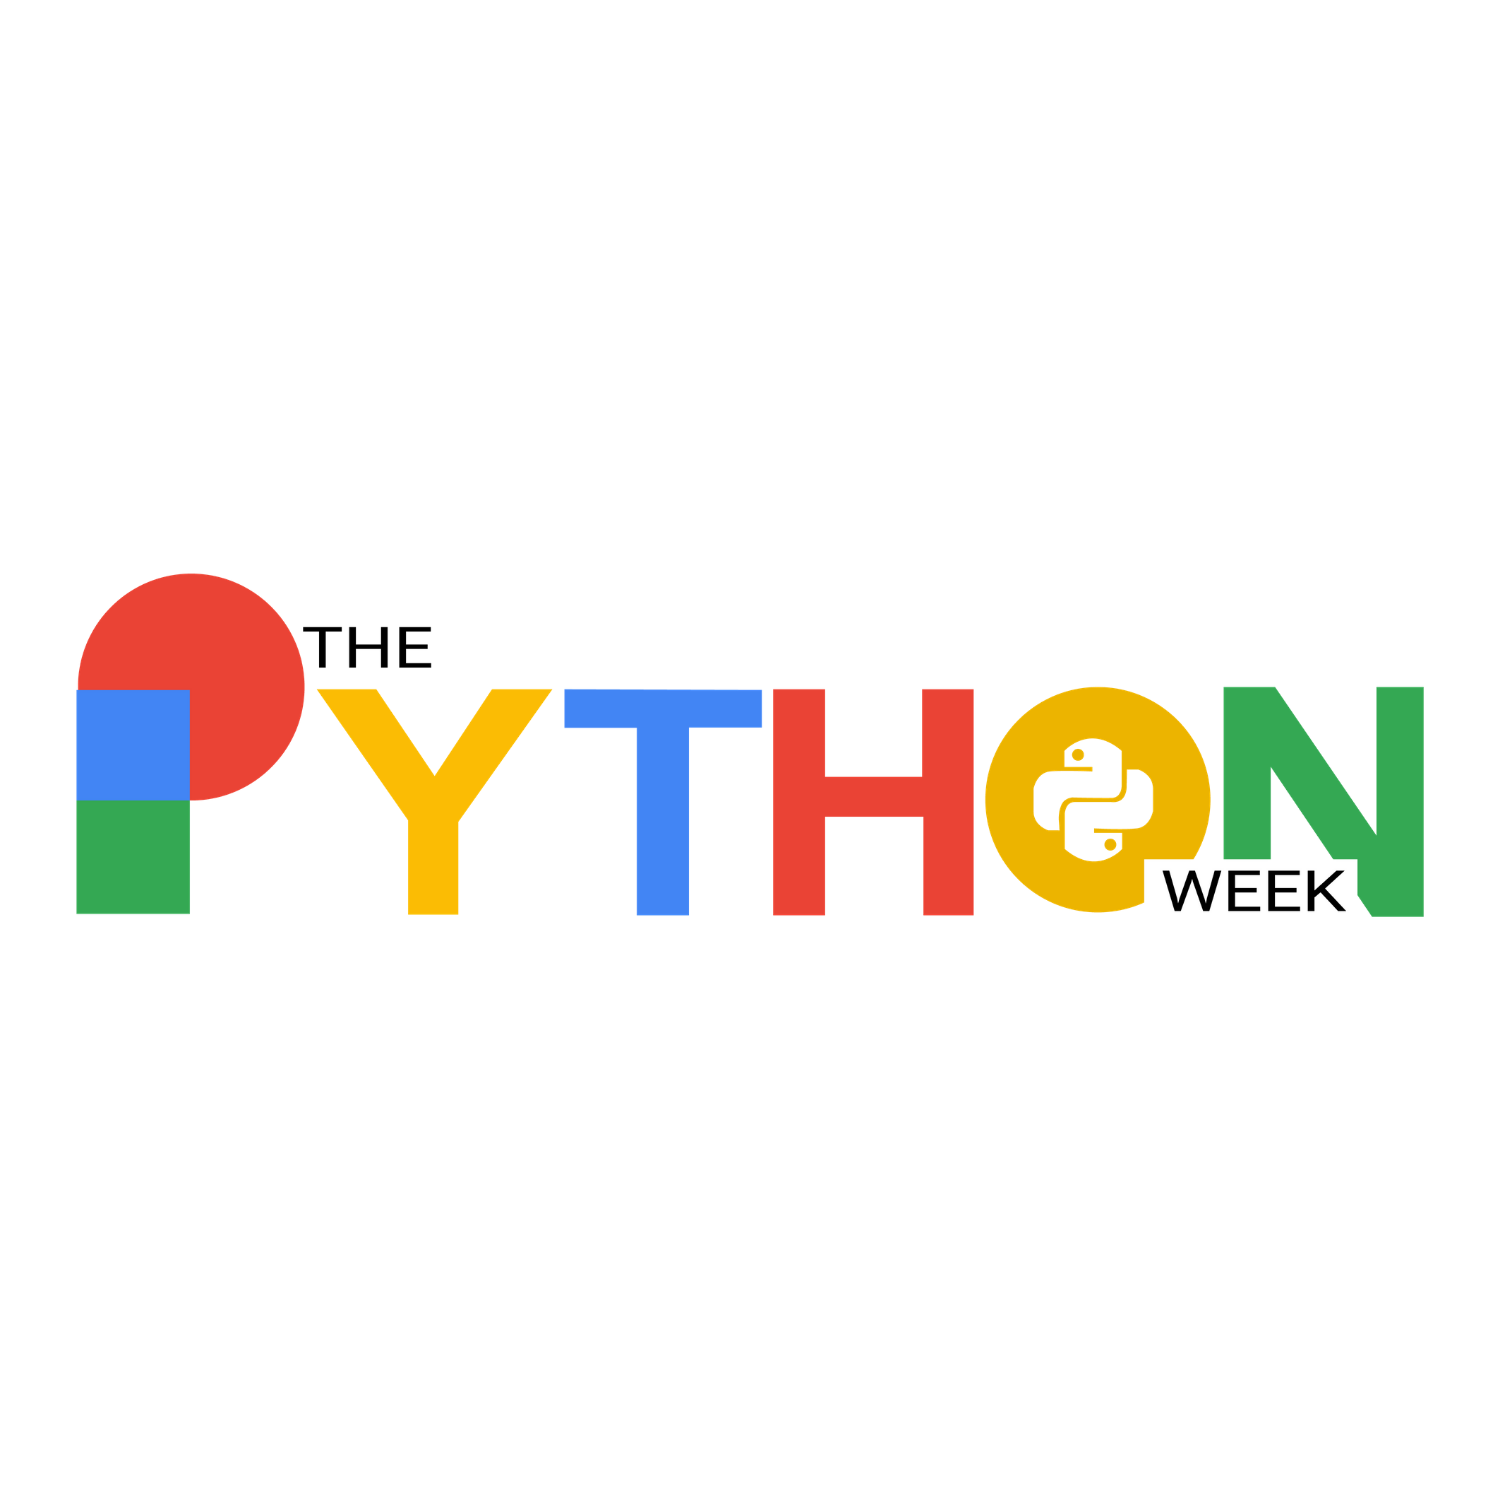 The Python Week